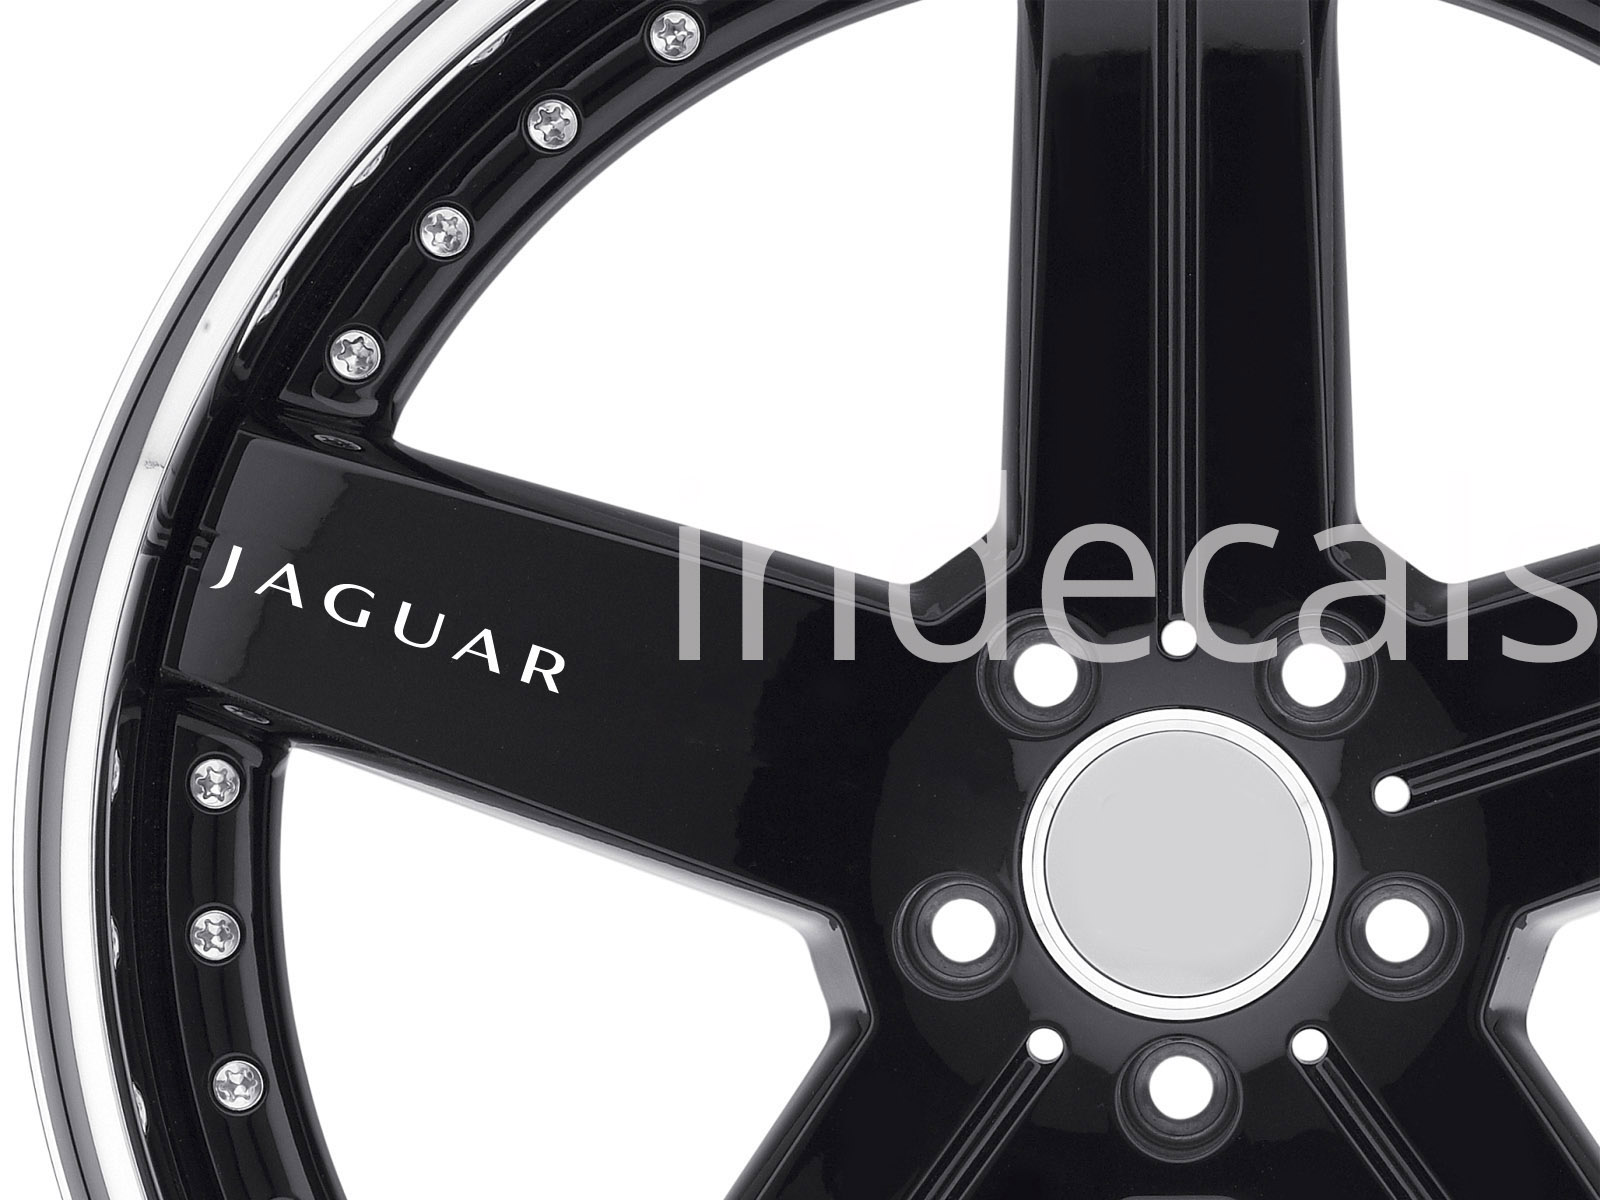 6 x Jaguar Stickers for Wheels - White